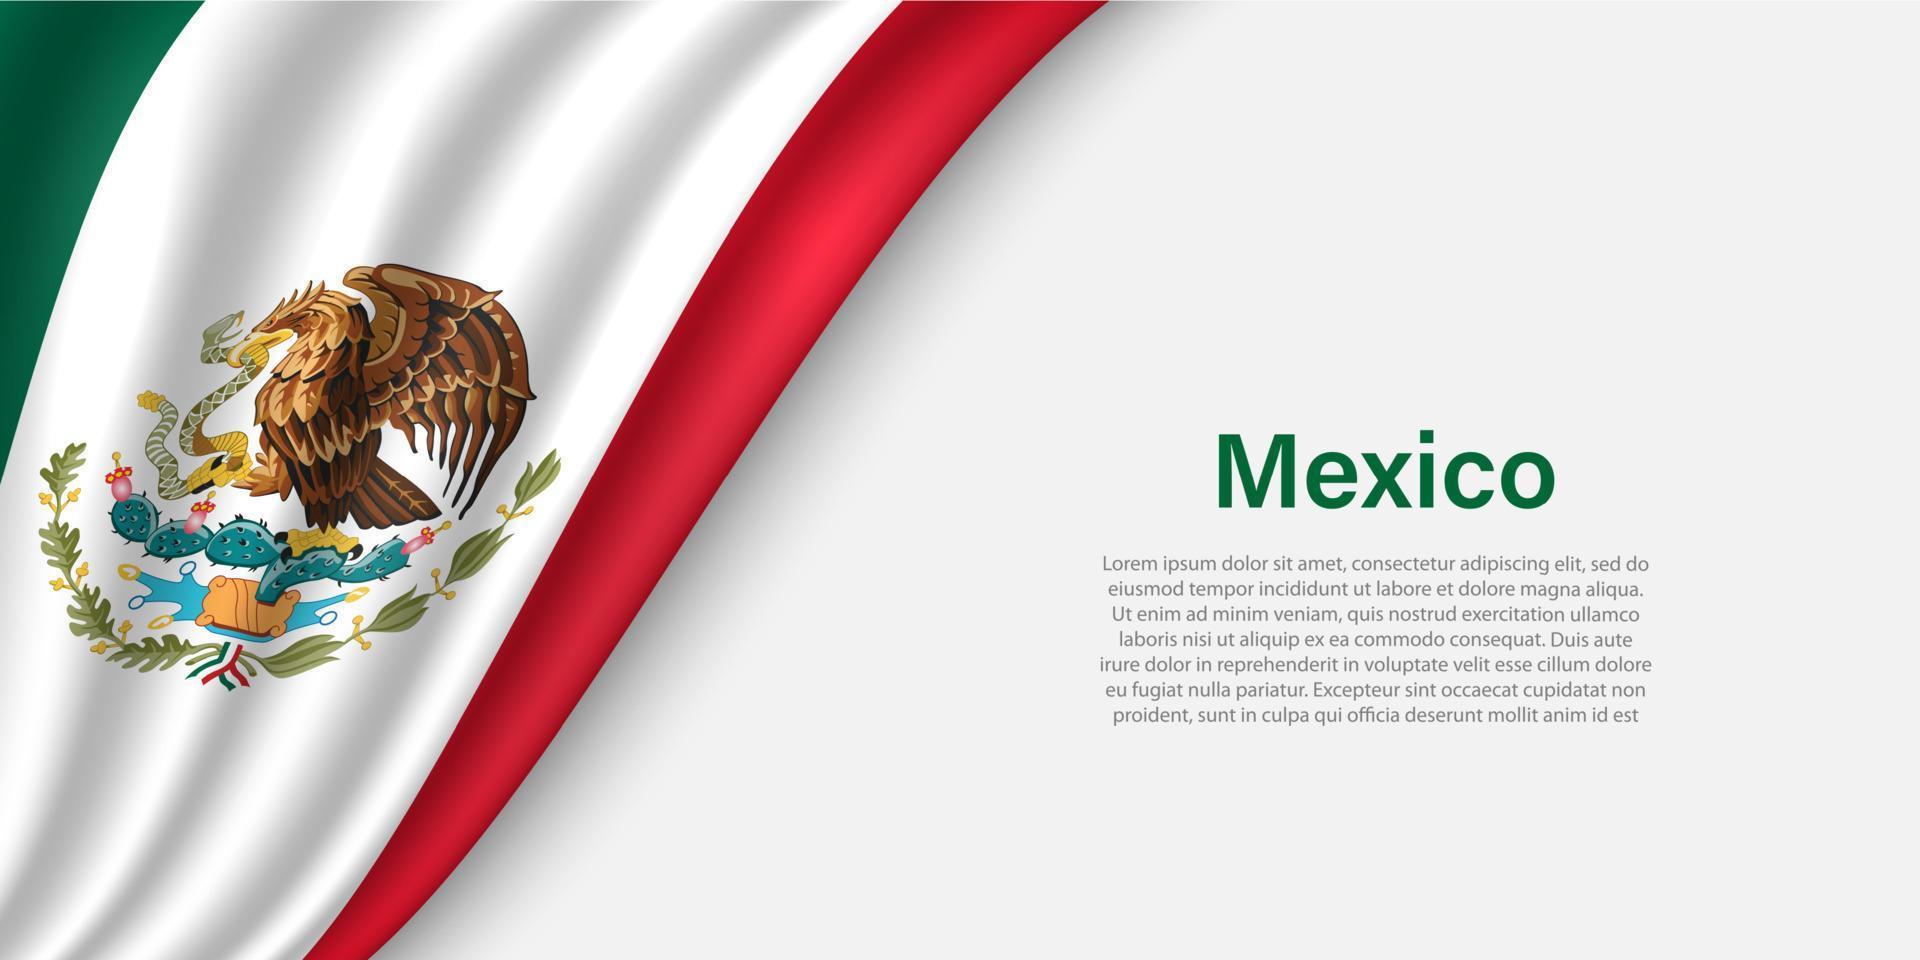 Vinka flagga av mexico på vit bakgrund. vektor